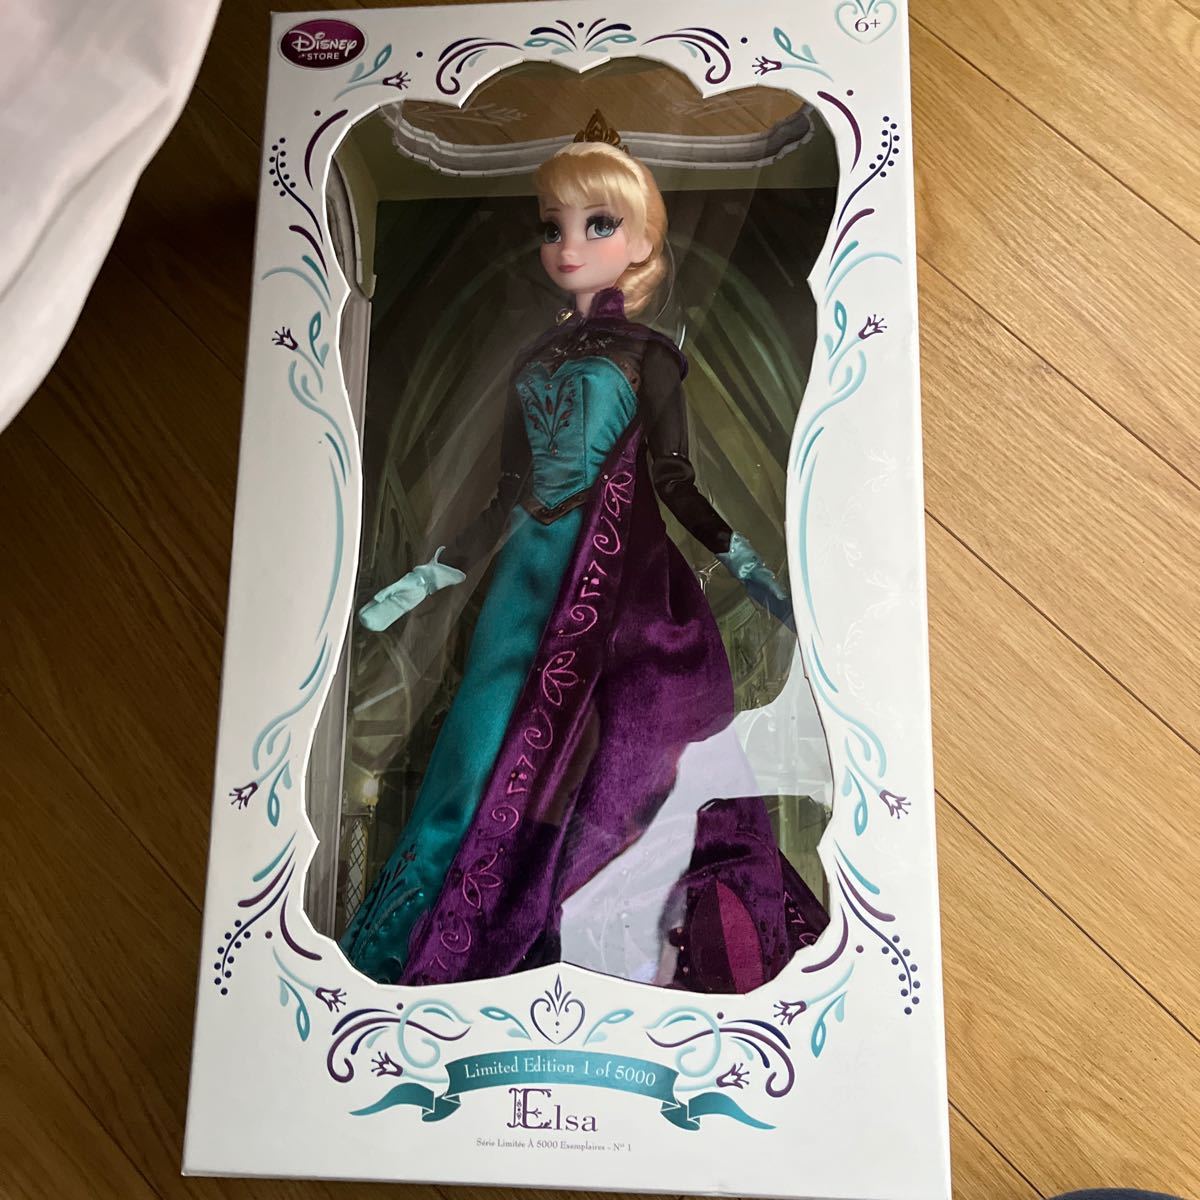  Disney ディズニー エルサ リミテッドドール アナと雪の女王 Frozen 限定品 アナ雪_画像2